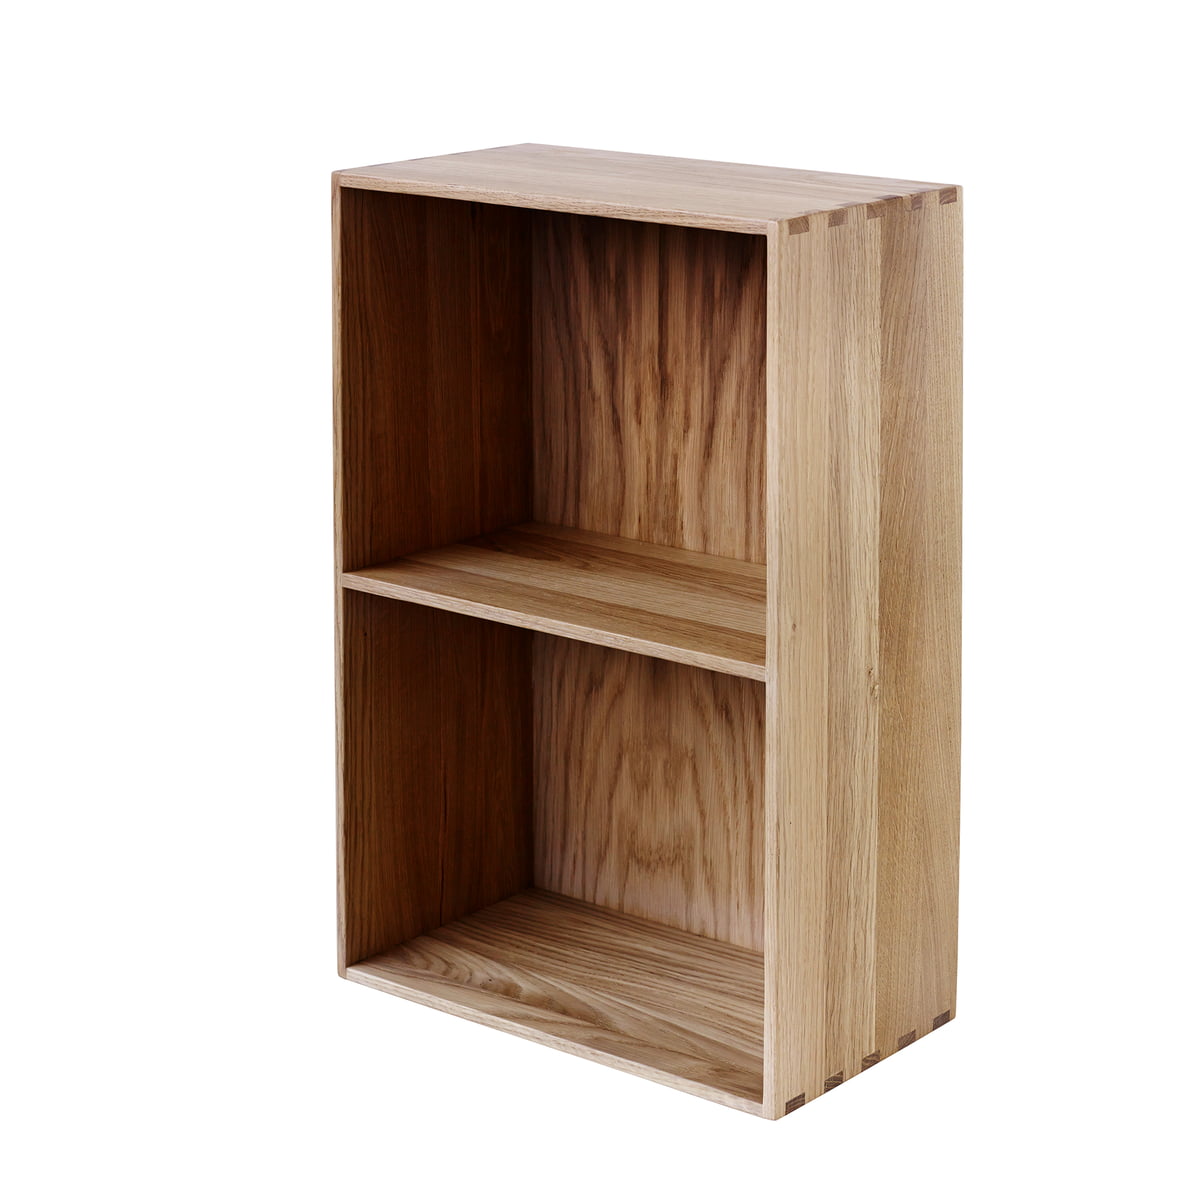 Fdb møbler - bookshelf B98 | Connox